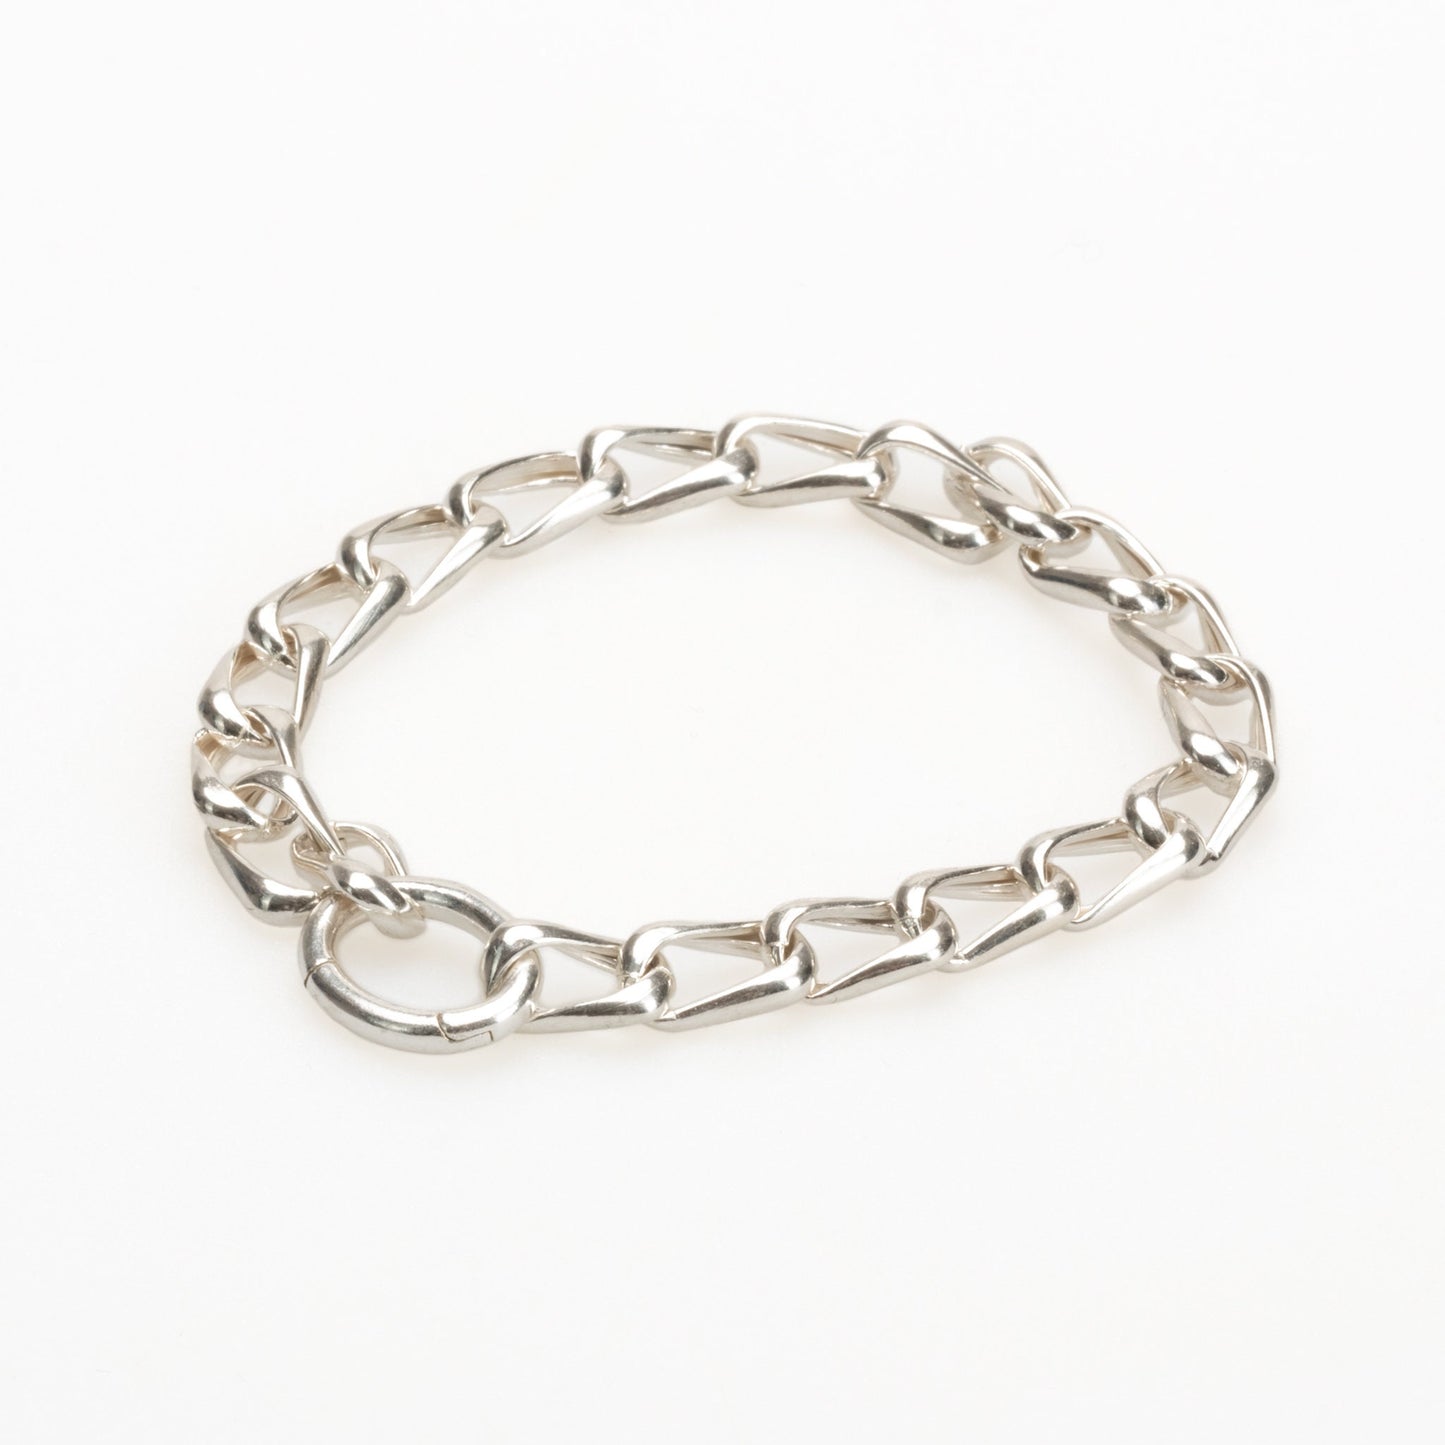 Silver Chunky Chain Bracelet, 925 Sterling Silver Bracelet, Curb Chain Bracelet